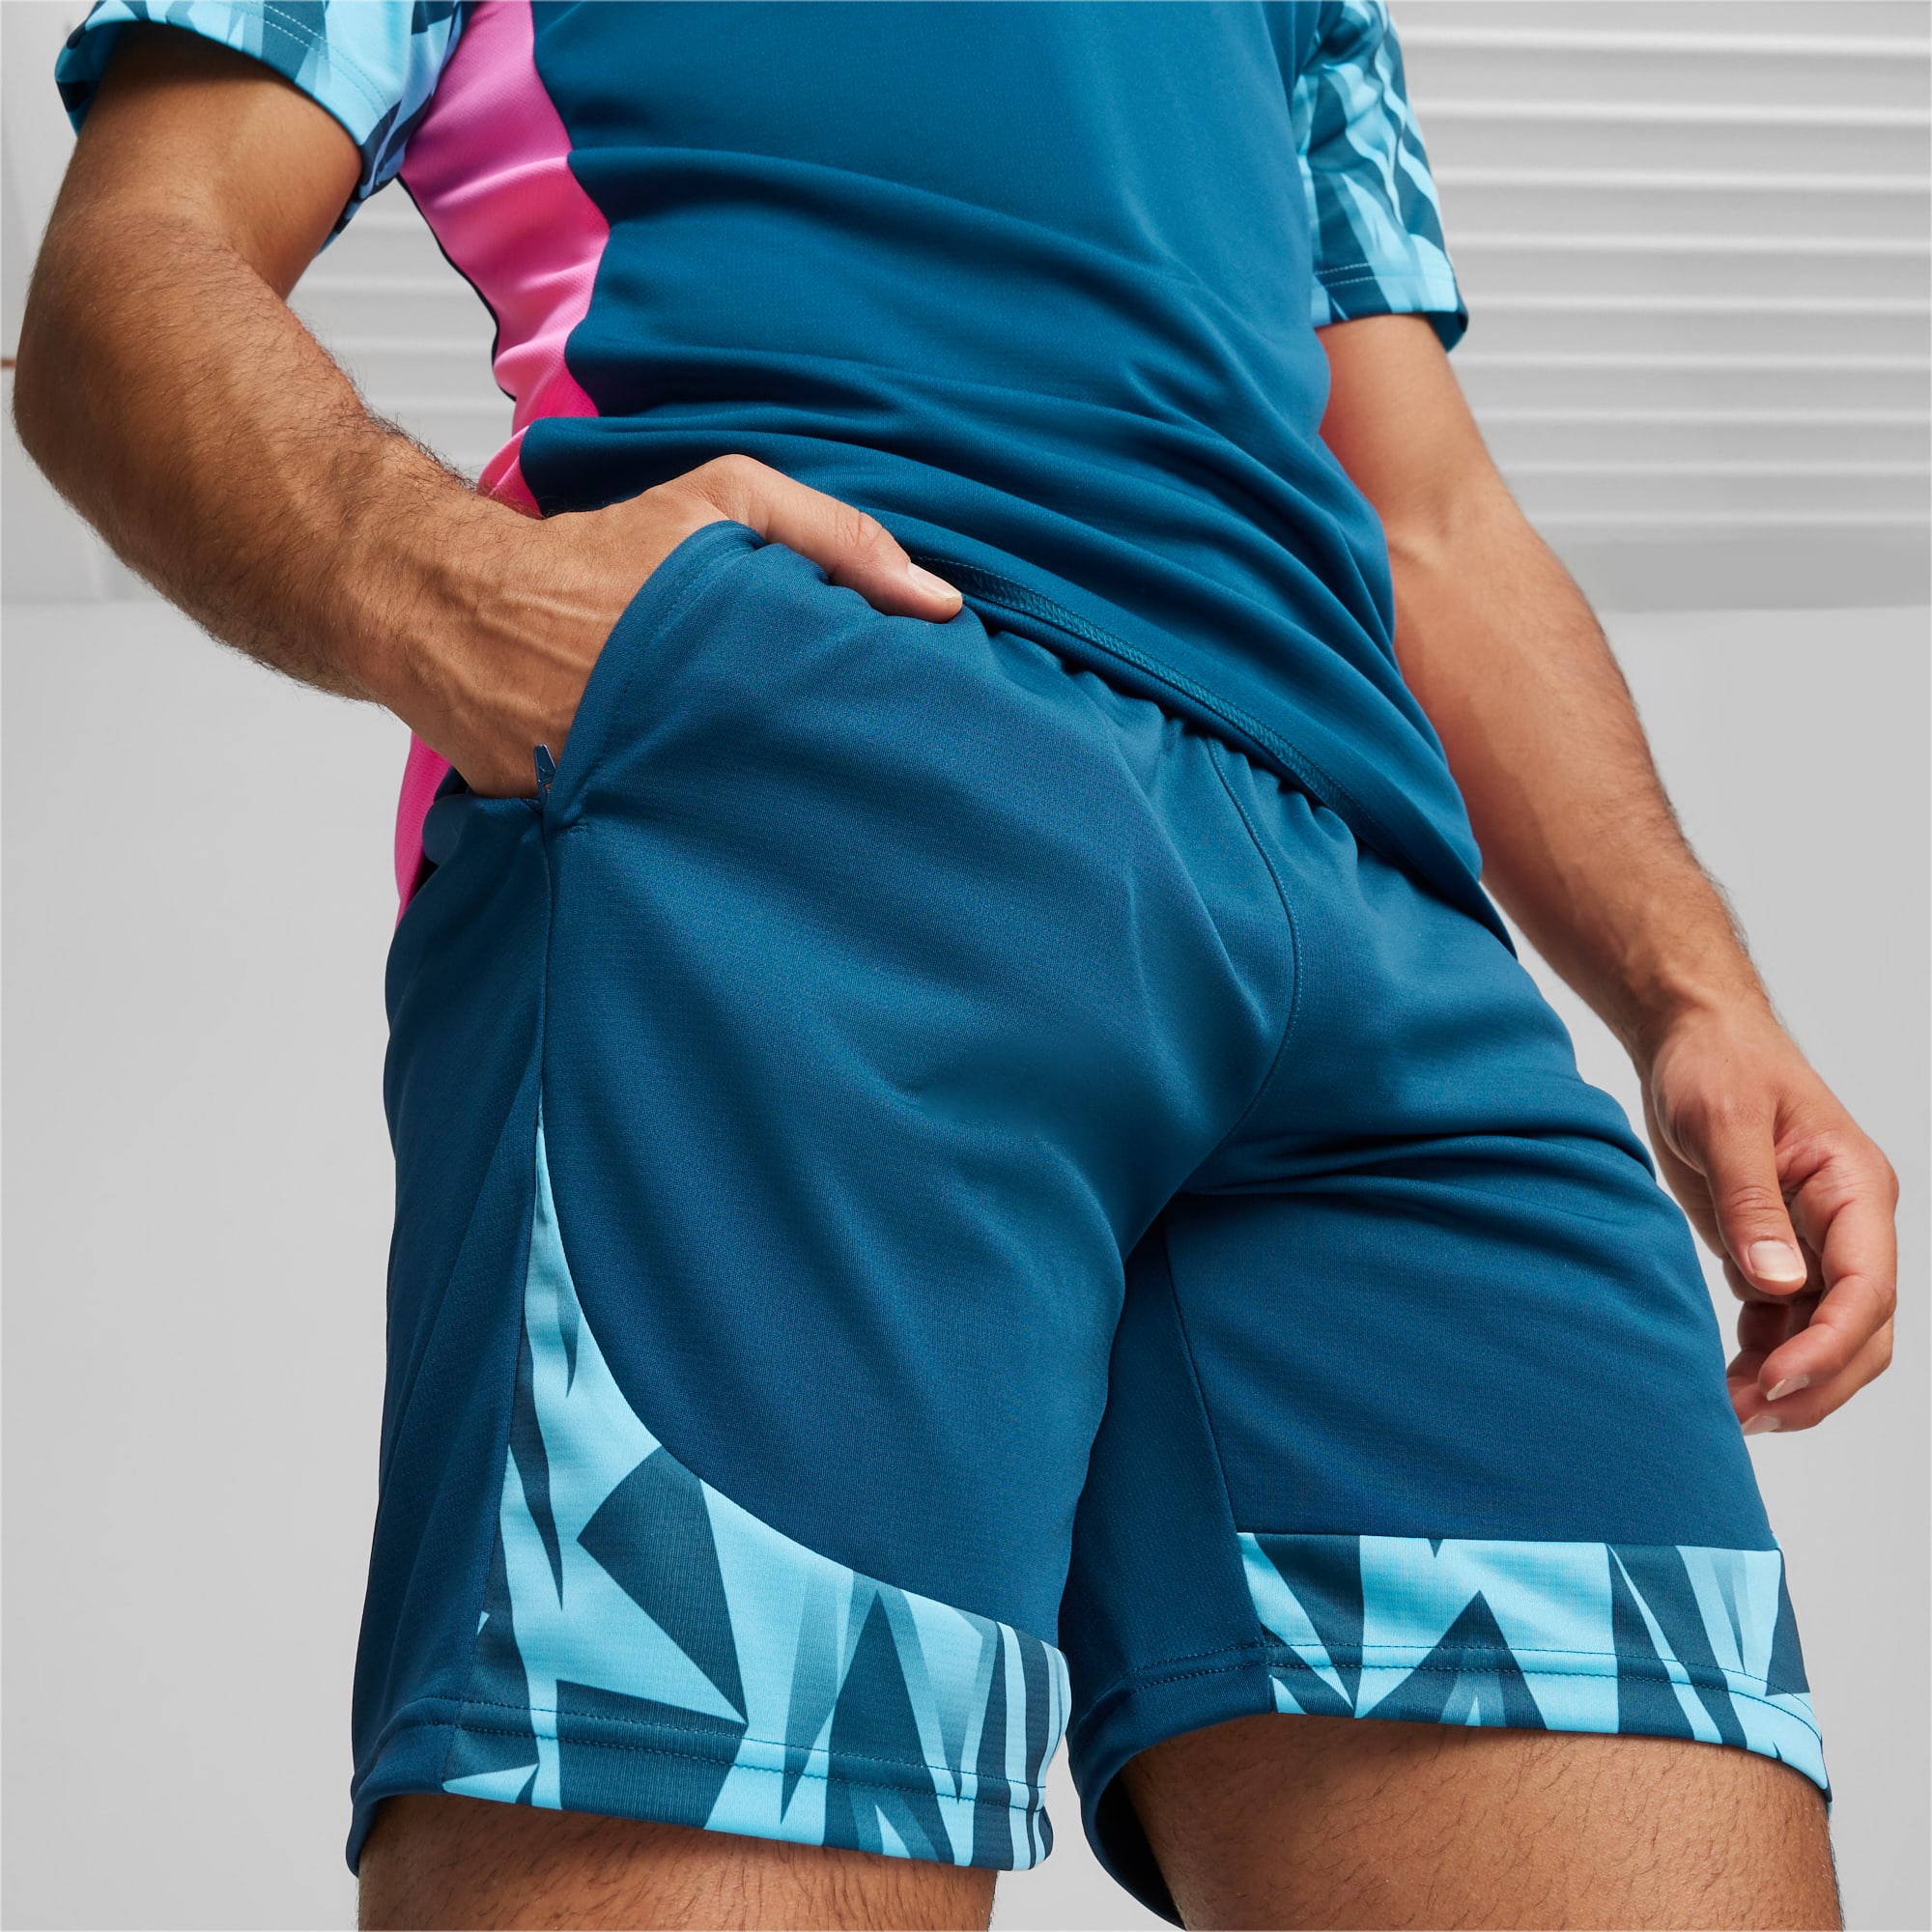 Buy Men's soccer shorts